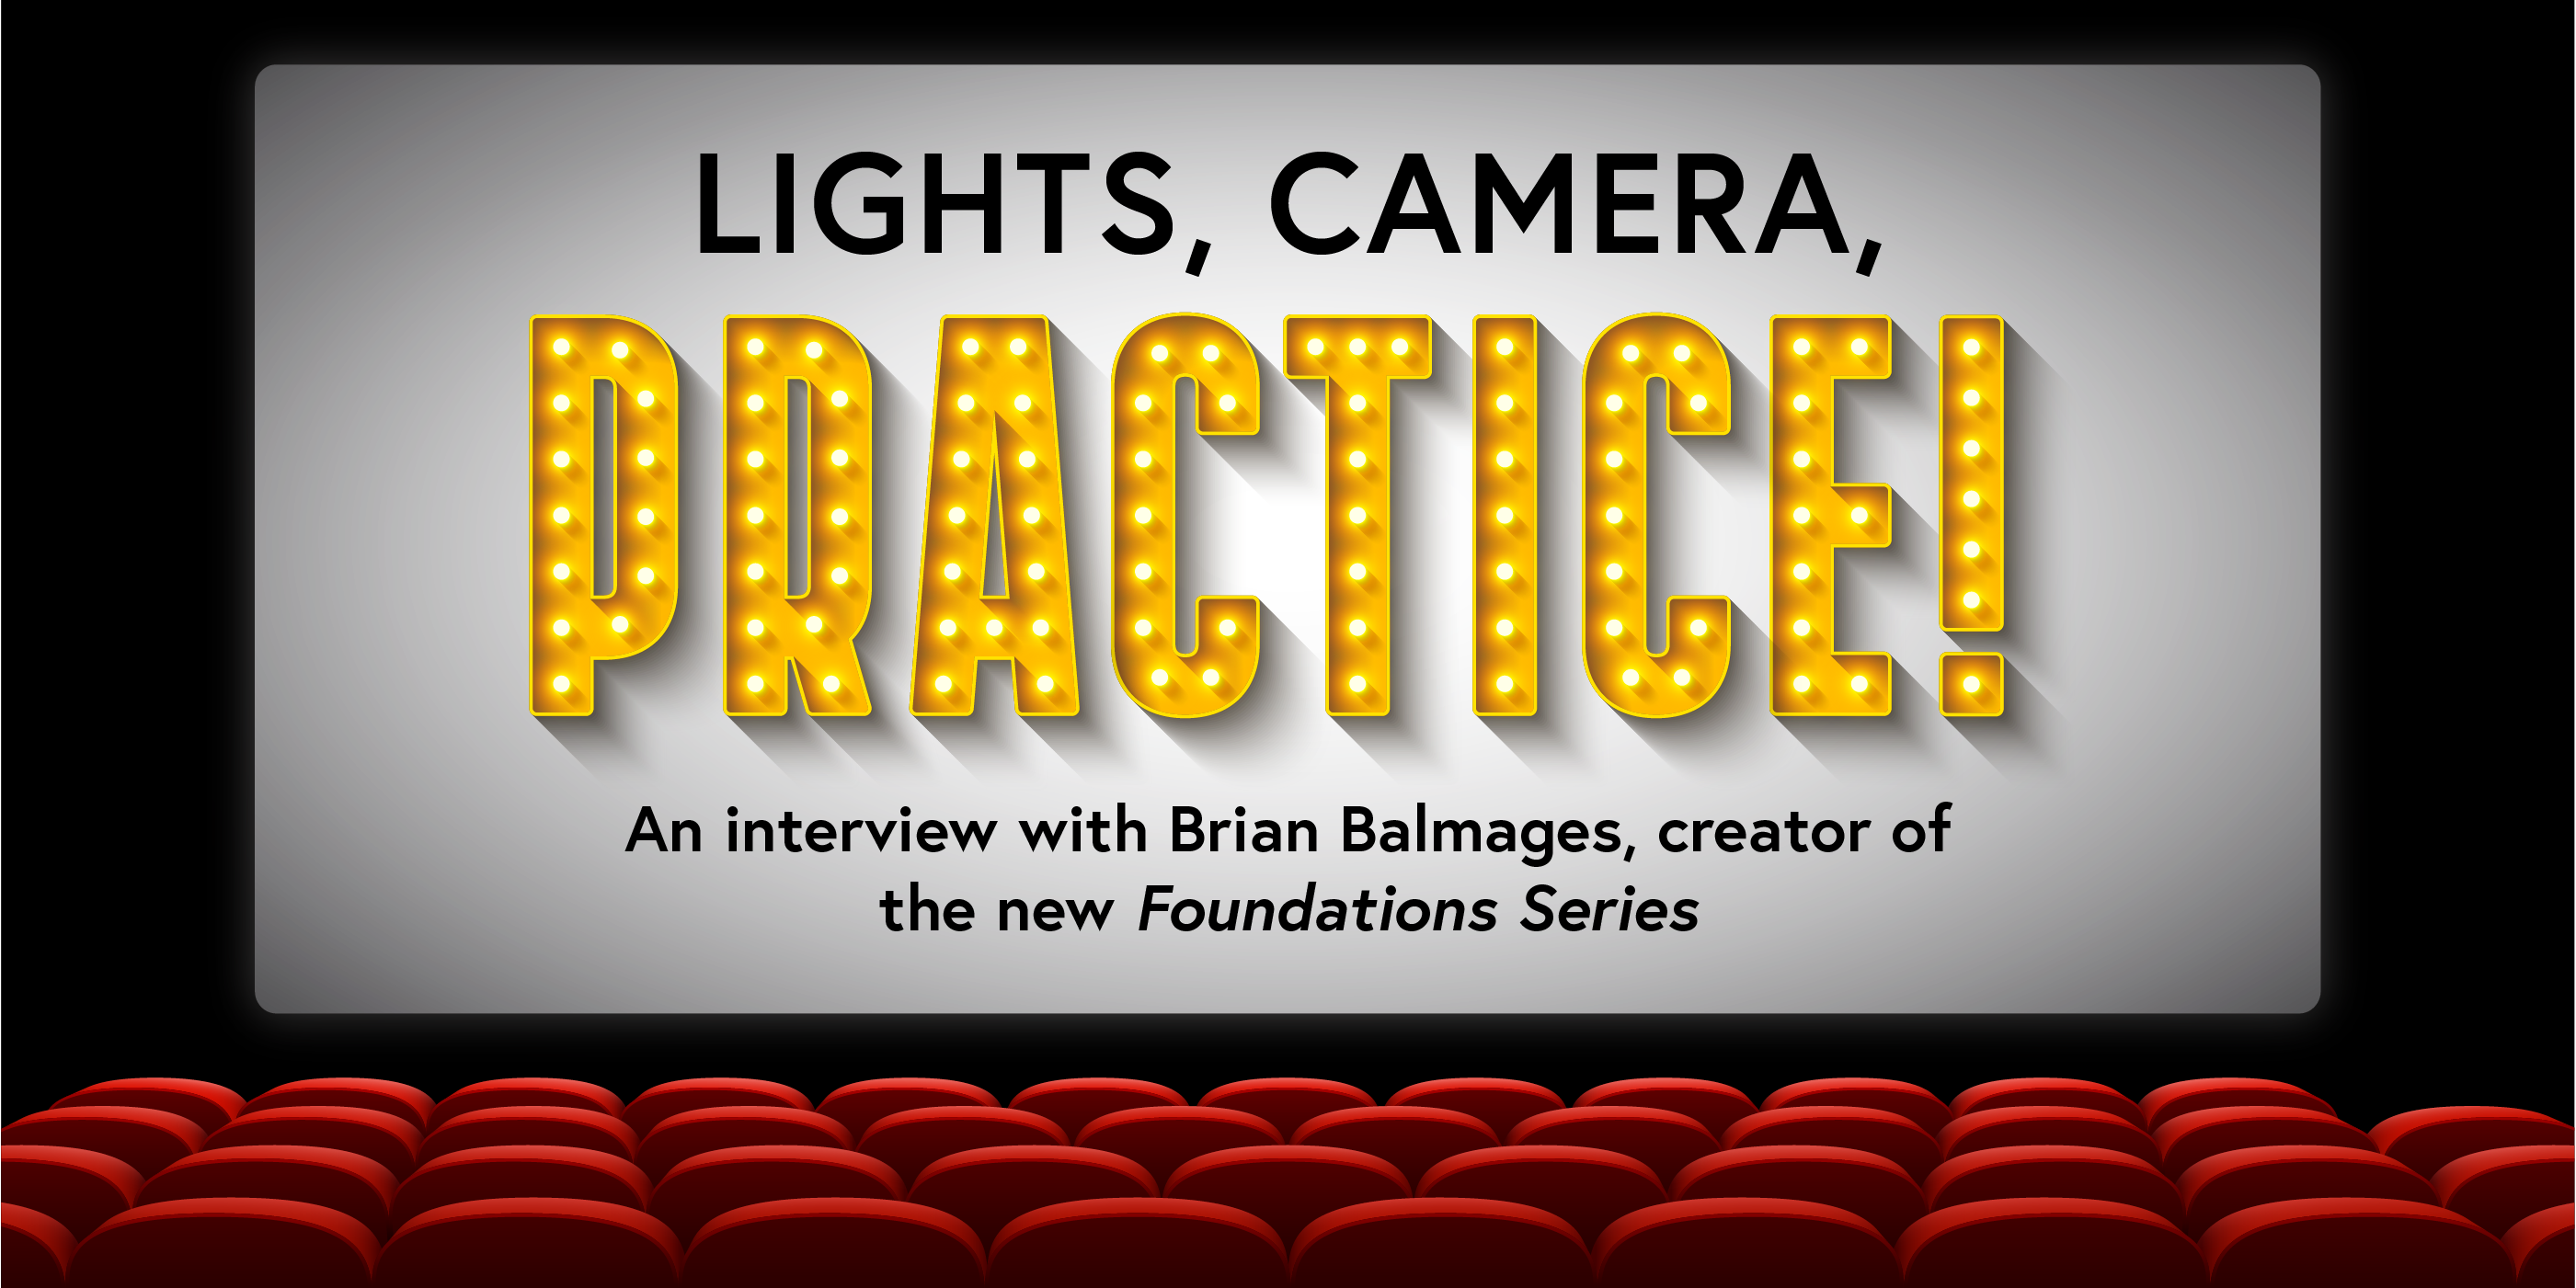 Lights, Camera, Practice